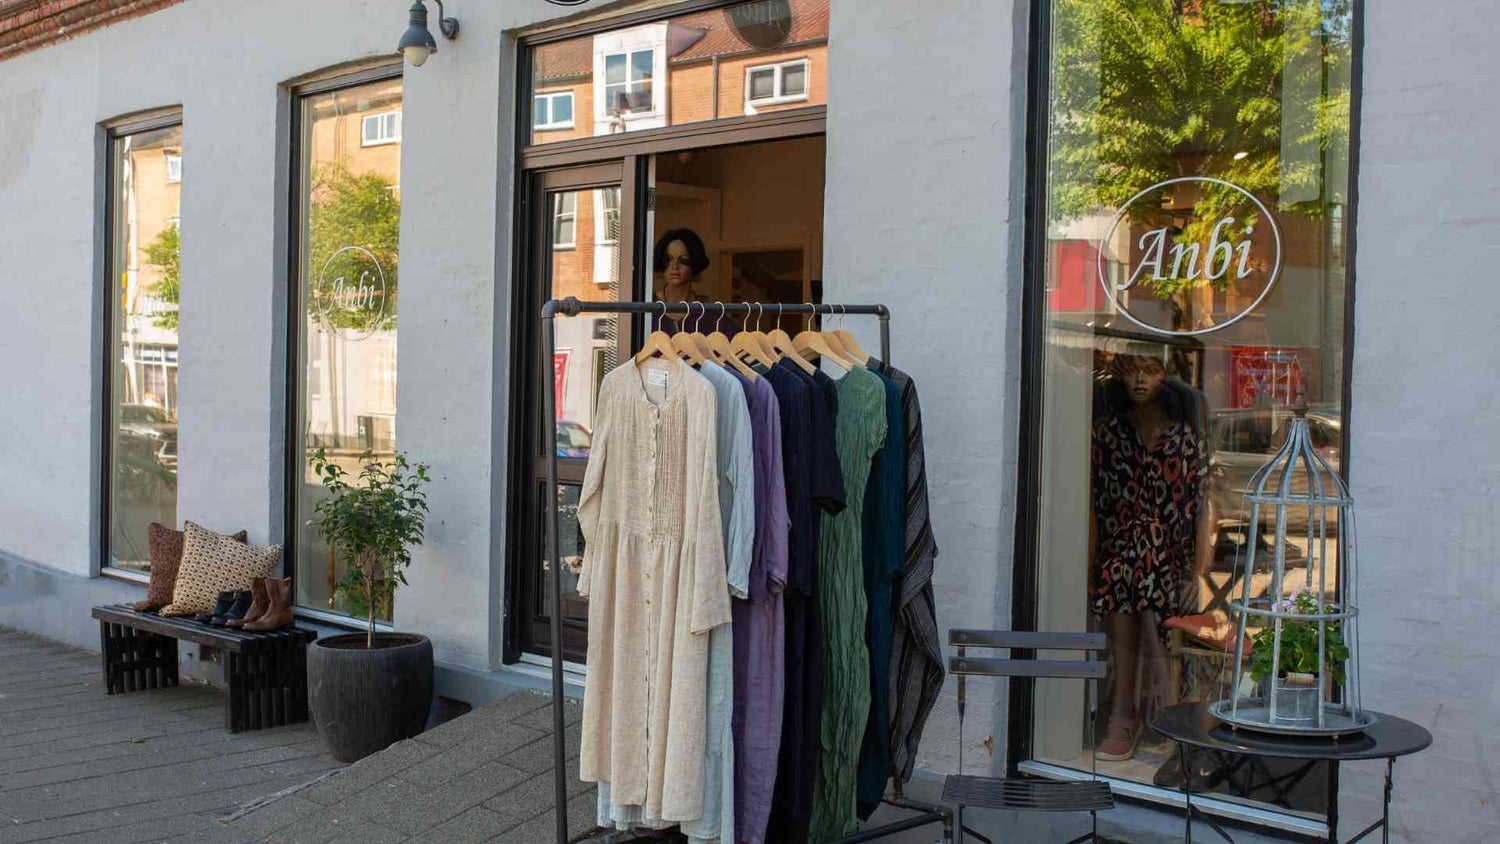 Anbi modebutik facade i Adelgade, Skanderborg